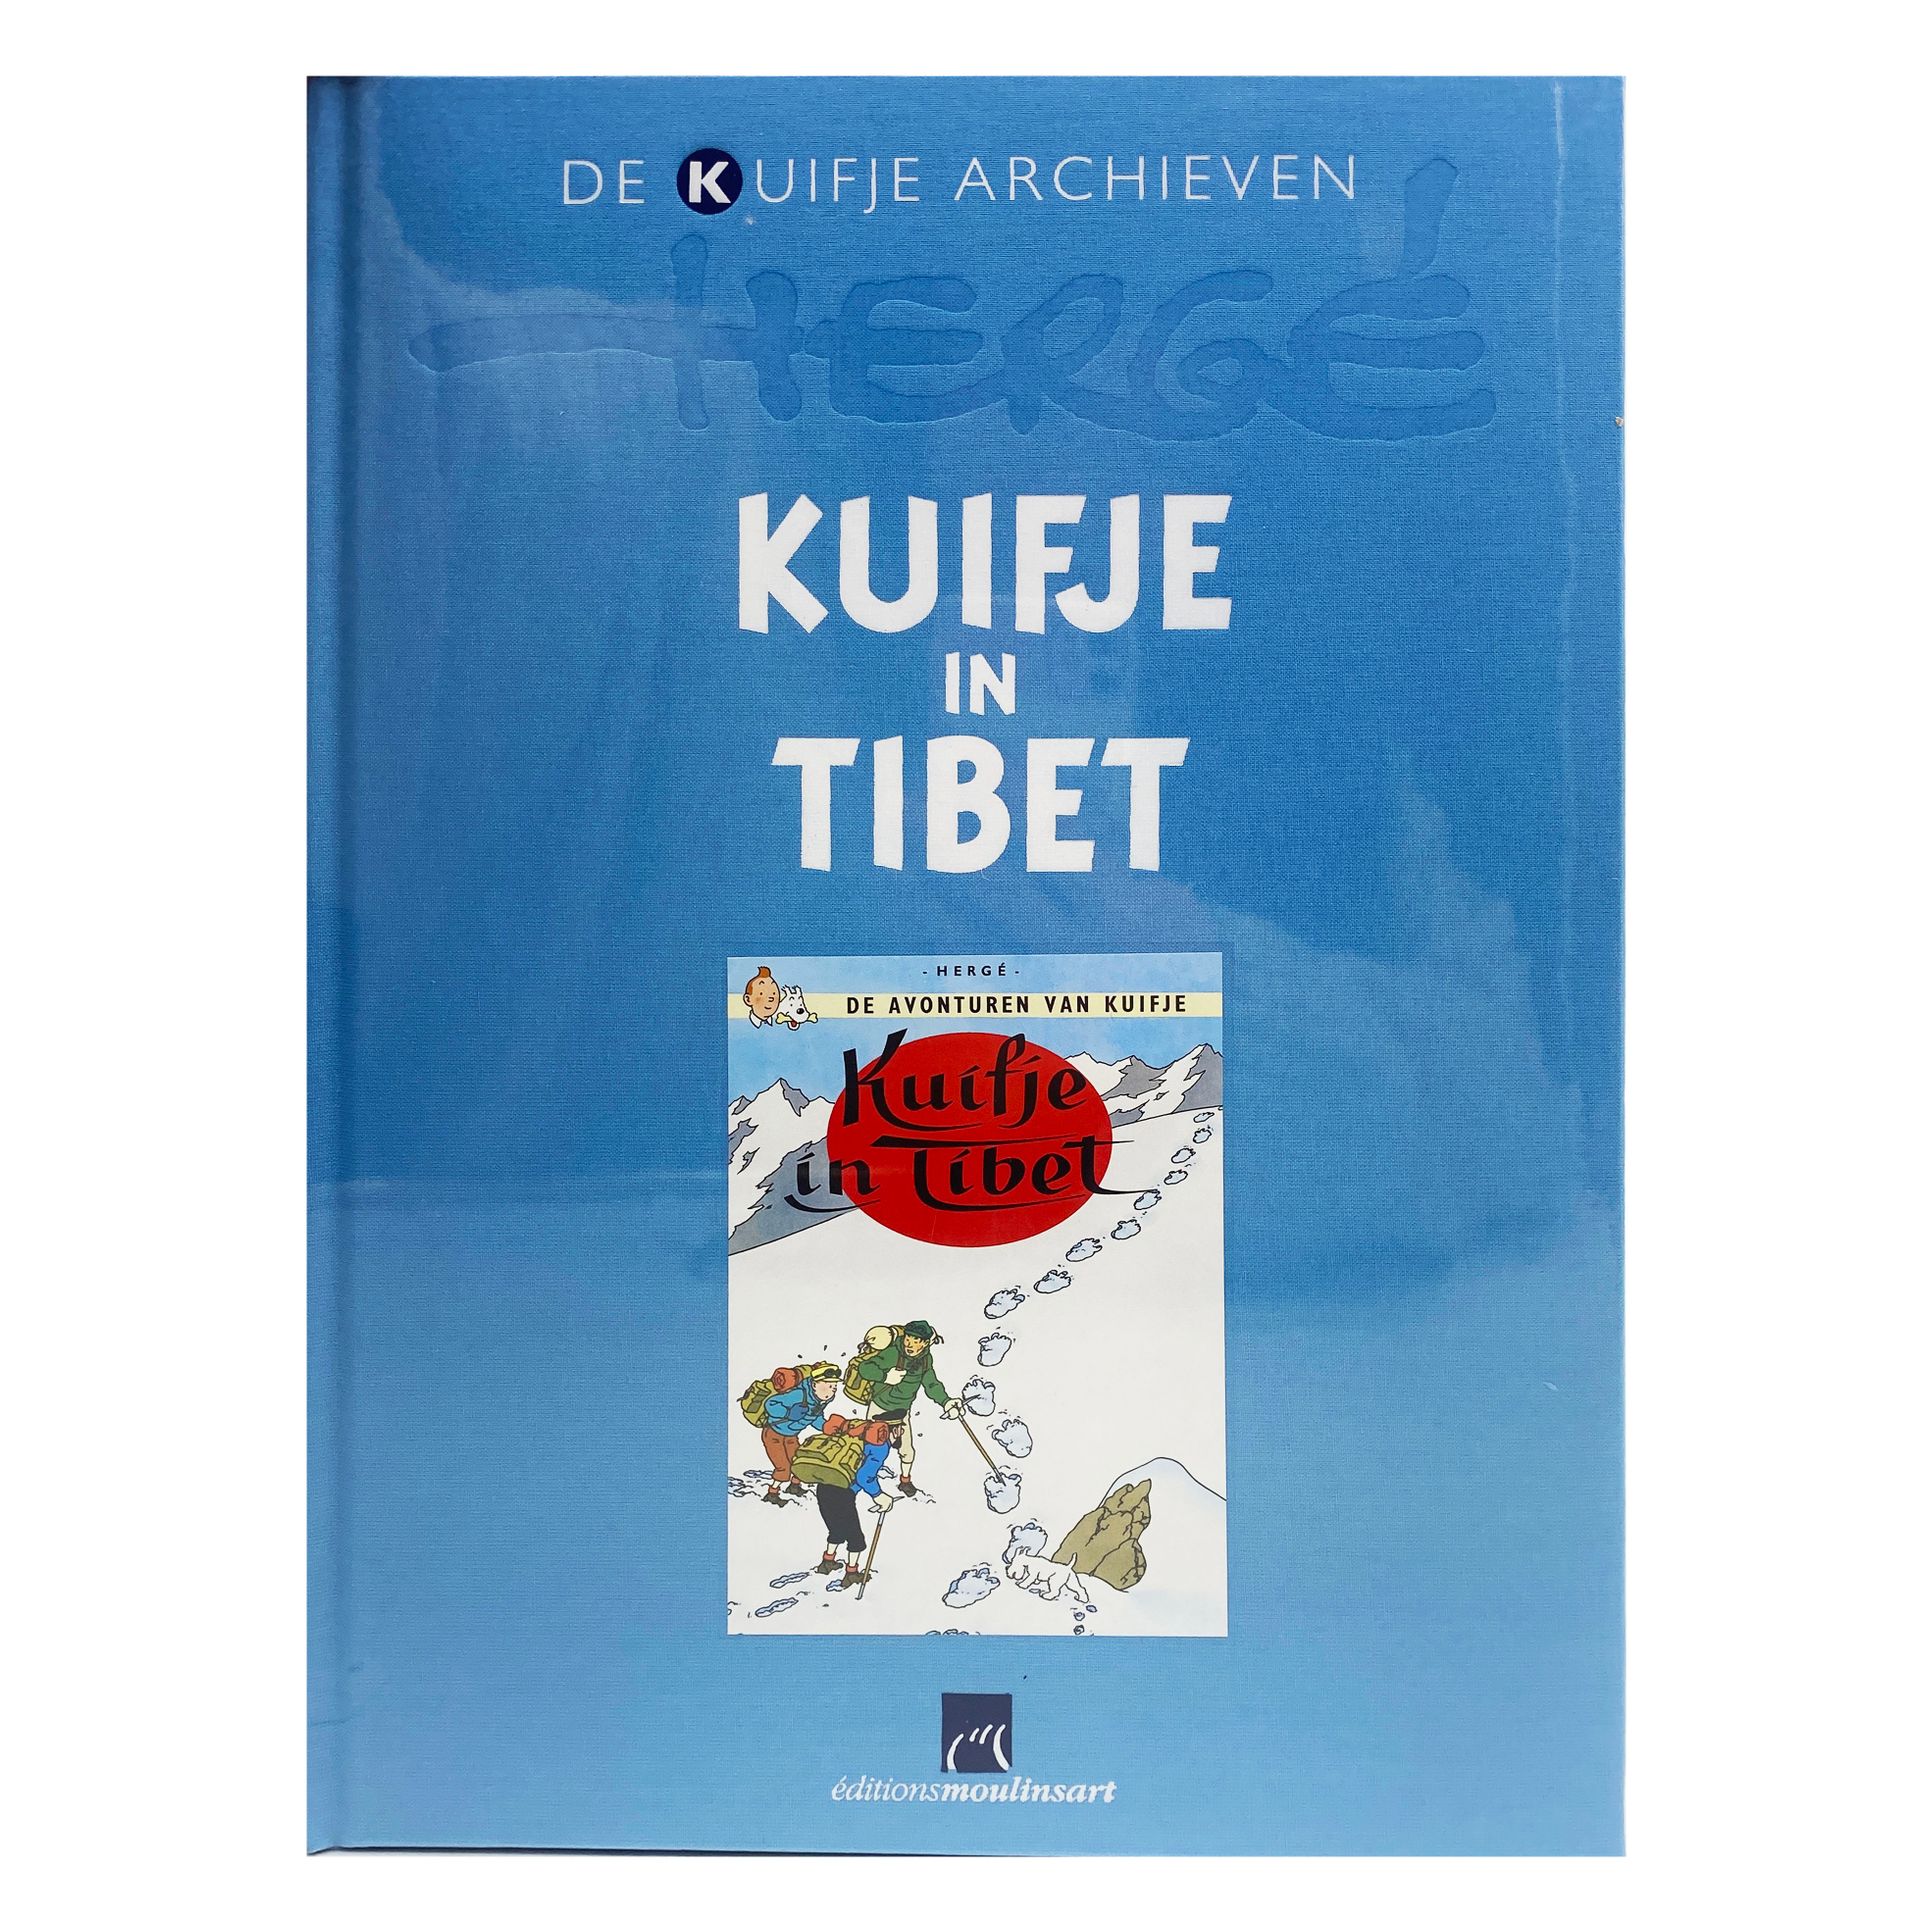 Null [HERGÉ] - 丁丁的档案 " 丁丁在西藏/Kuifje在西藏 " 荷兰语版。
布质画册，有原版画册和64页档案资料。
卡斯特曼出版社--穆林萨特&hellip;